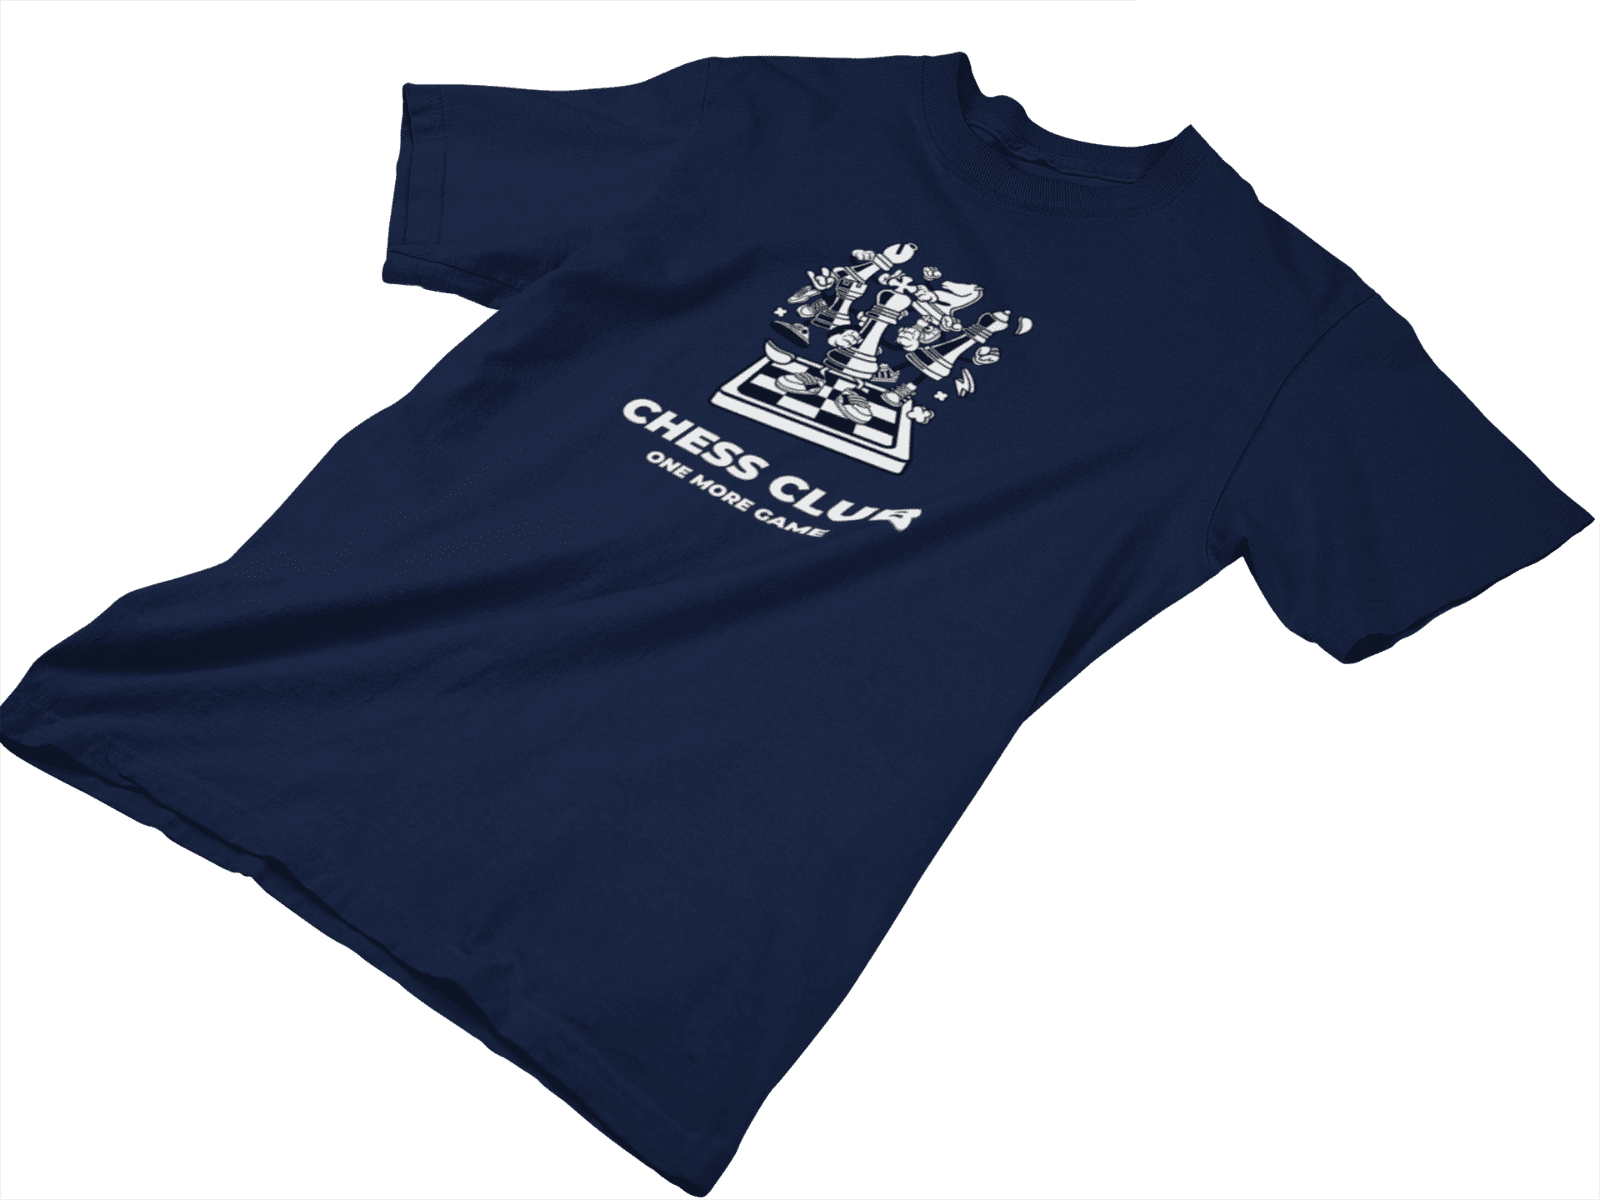 Ruy lopez opening chess board - chess player gift' Unisex Baseball T-Shirt